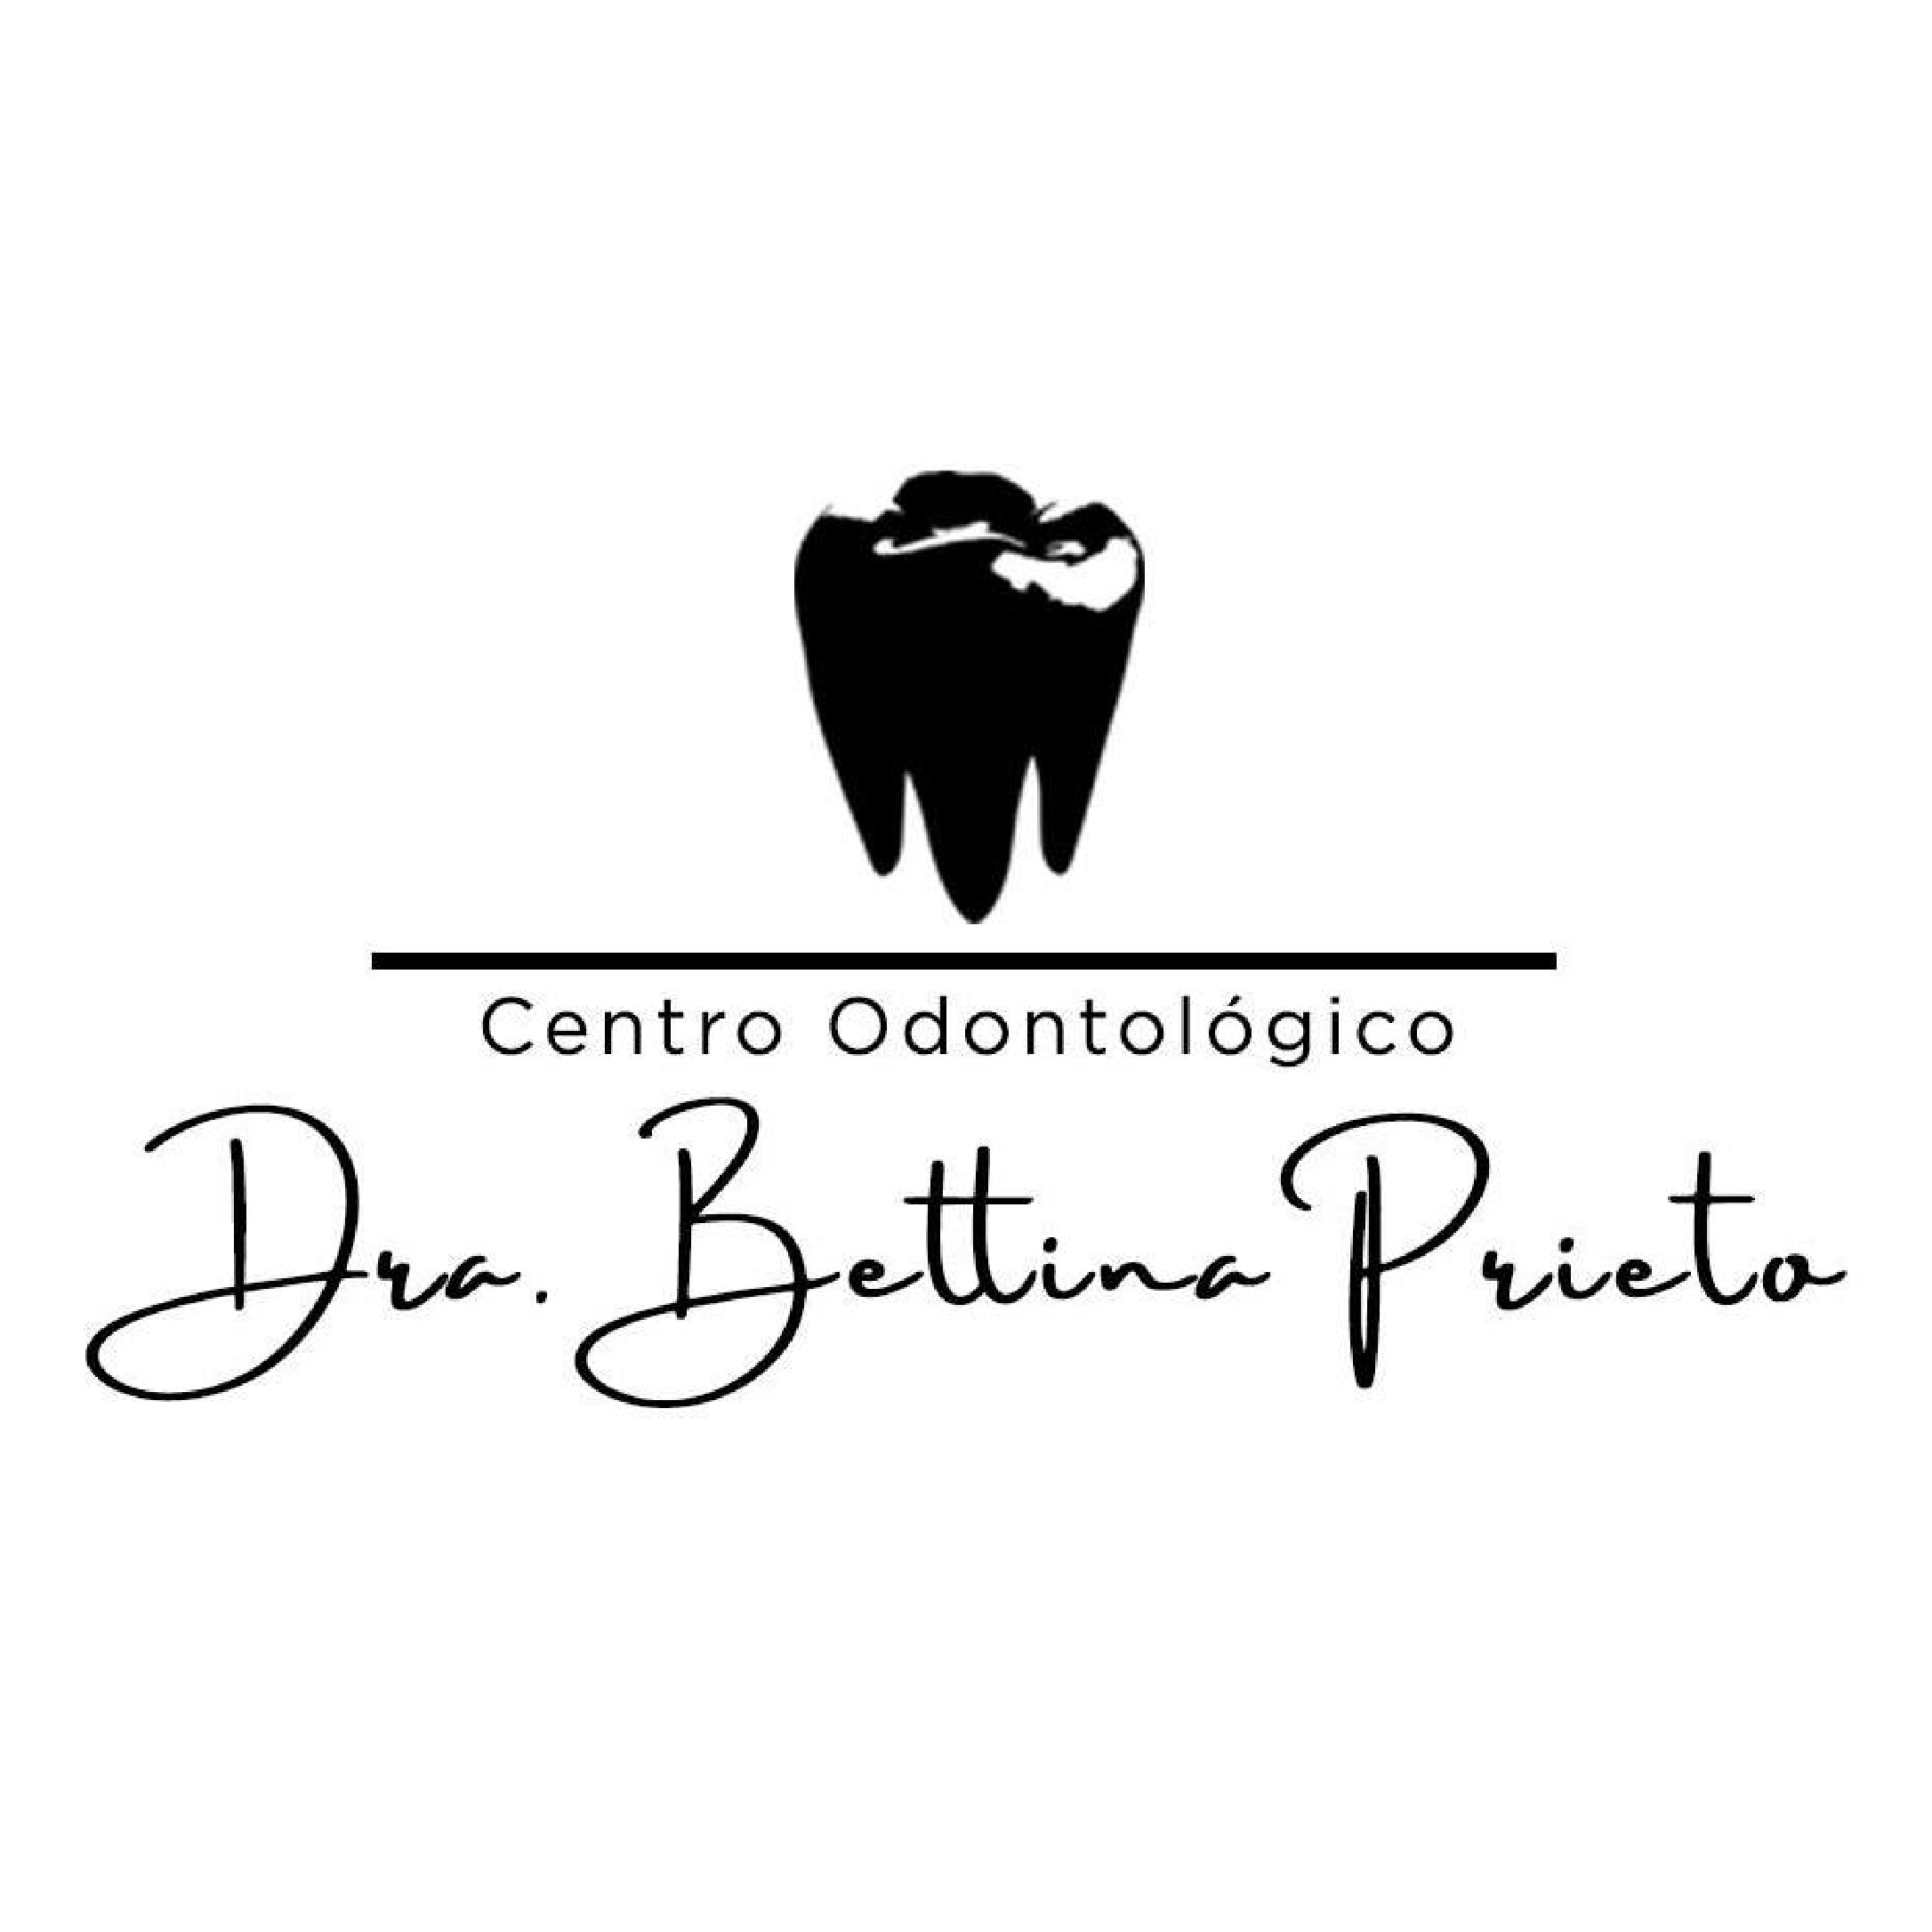 Centro Odontológica Dra. Bettina Prieto